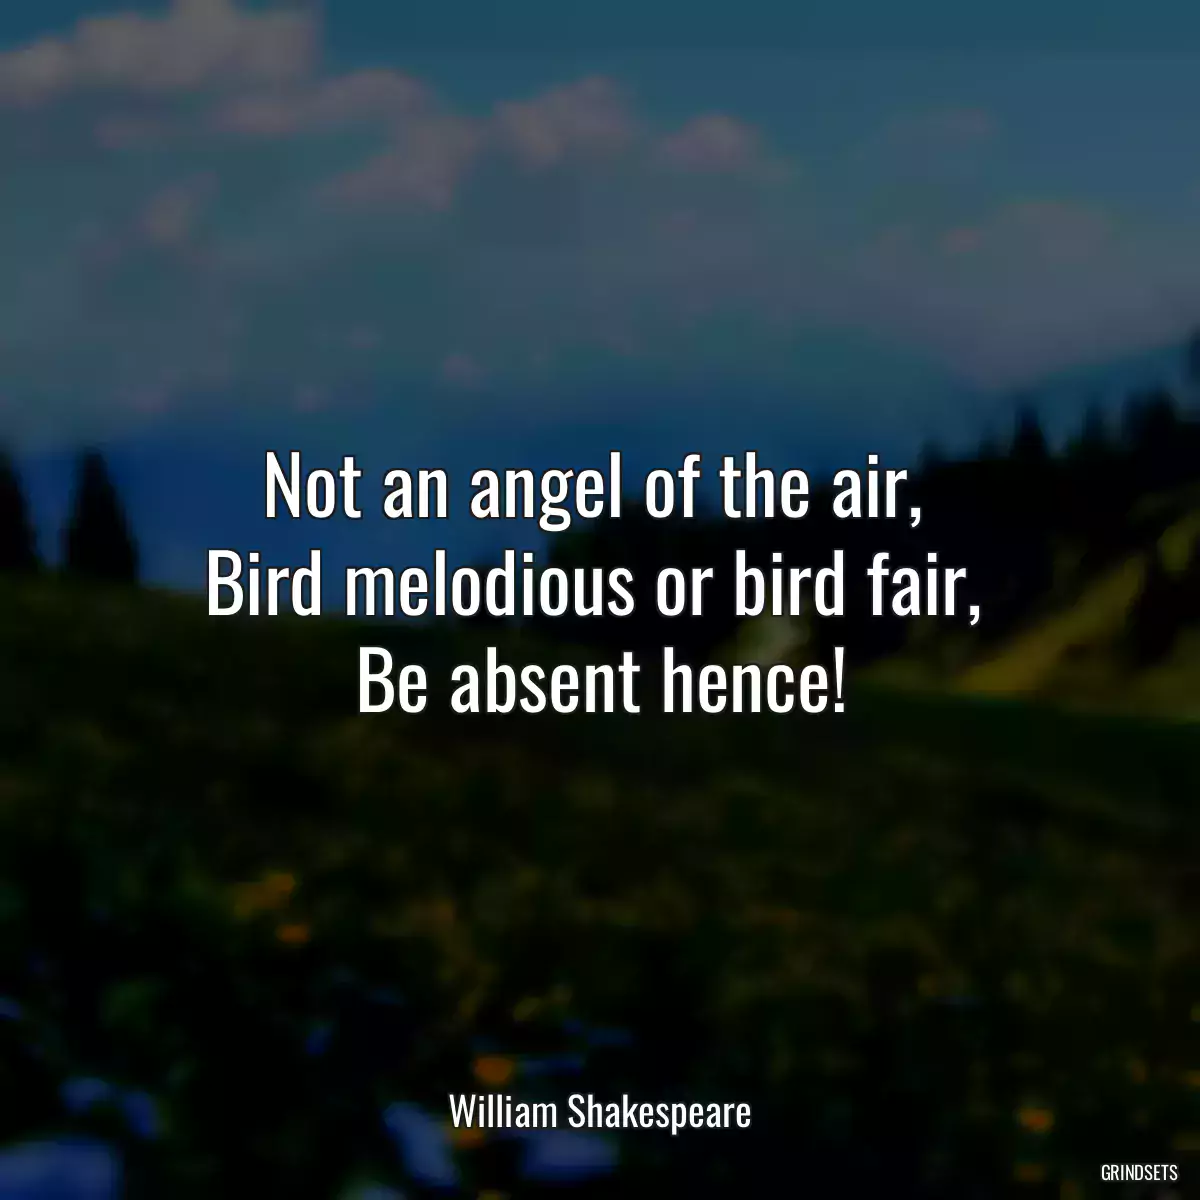 Not an angel of the air, 
Bird melodious or bird fair, 
Be absent hence!